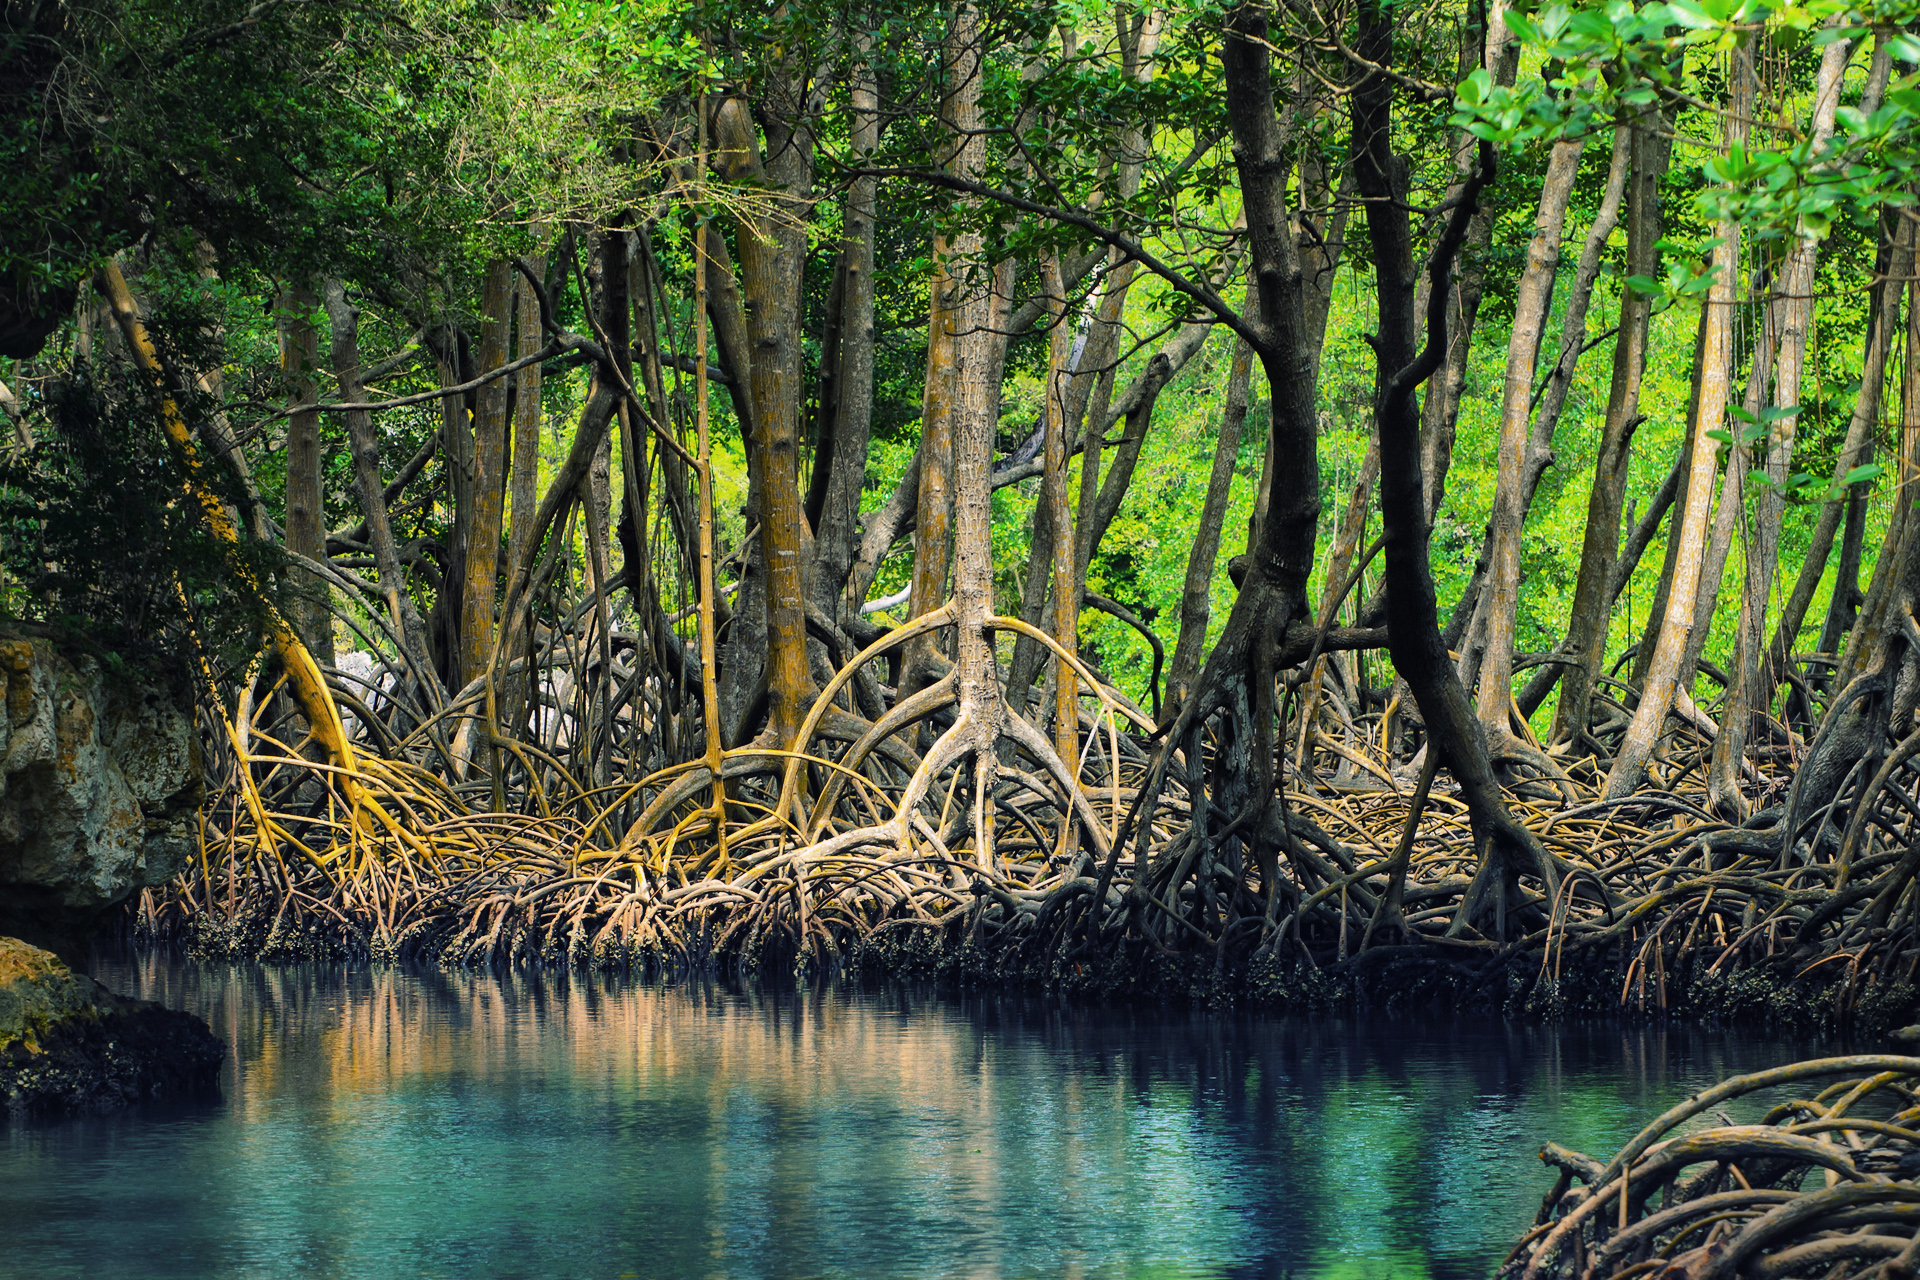 Sturdy mangrove trees growing along jewel bleu river banks.